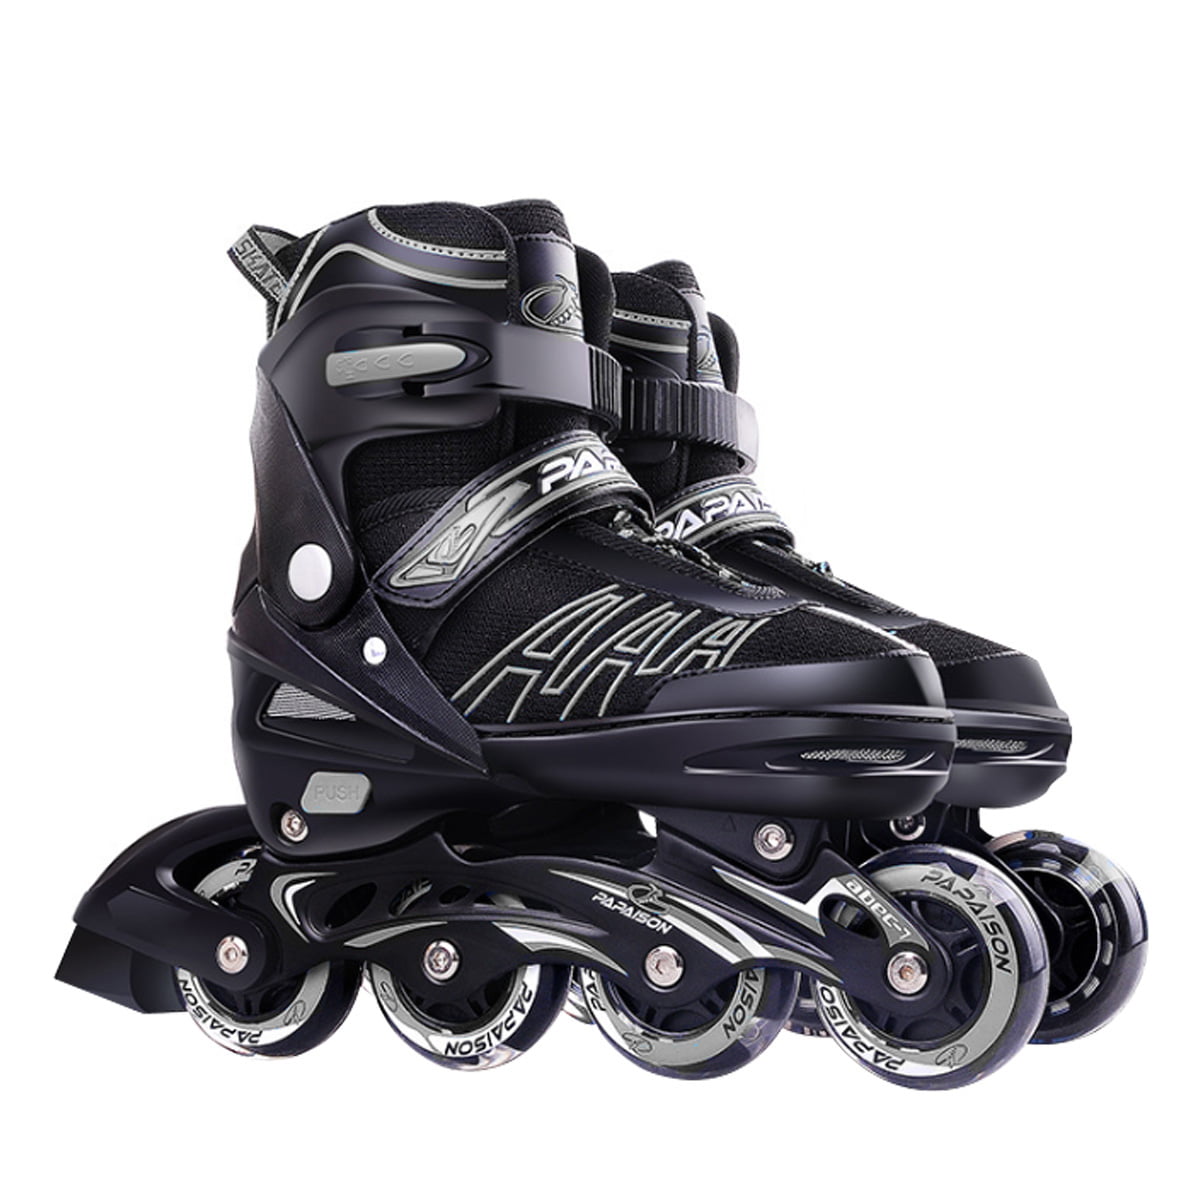 Details about   Kids Inline Skates Illuminating Wheel Adjustable Roller Blades Girls Boys Gifts% 